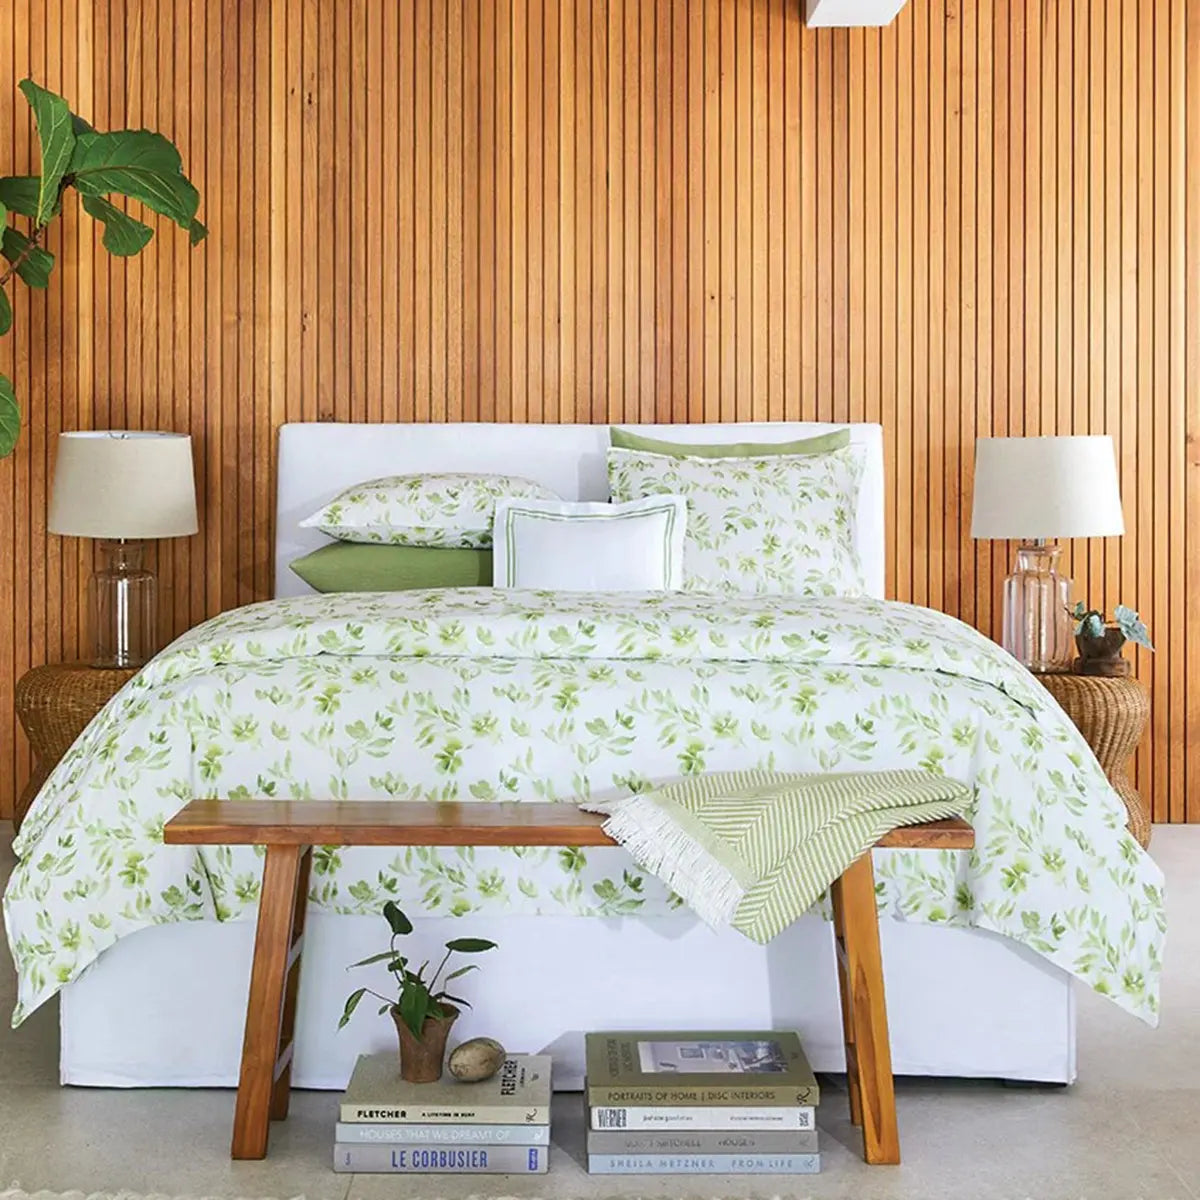 Sferra Procida Bedding collection in Kiwi in a room